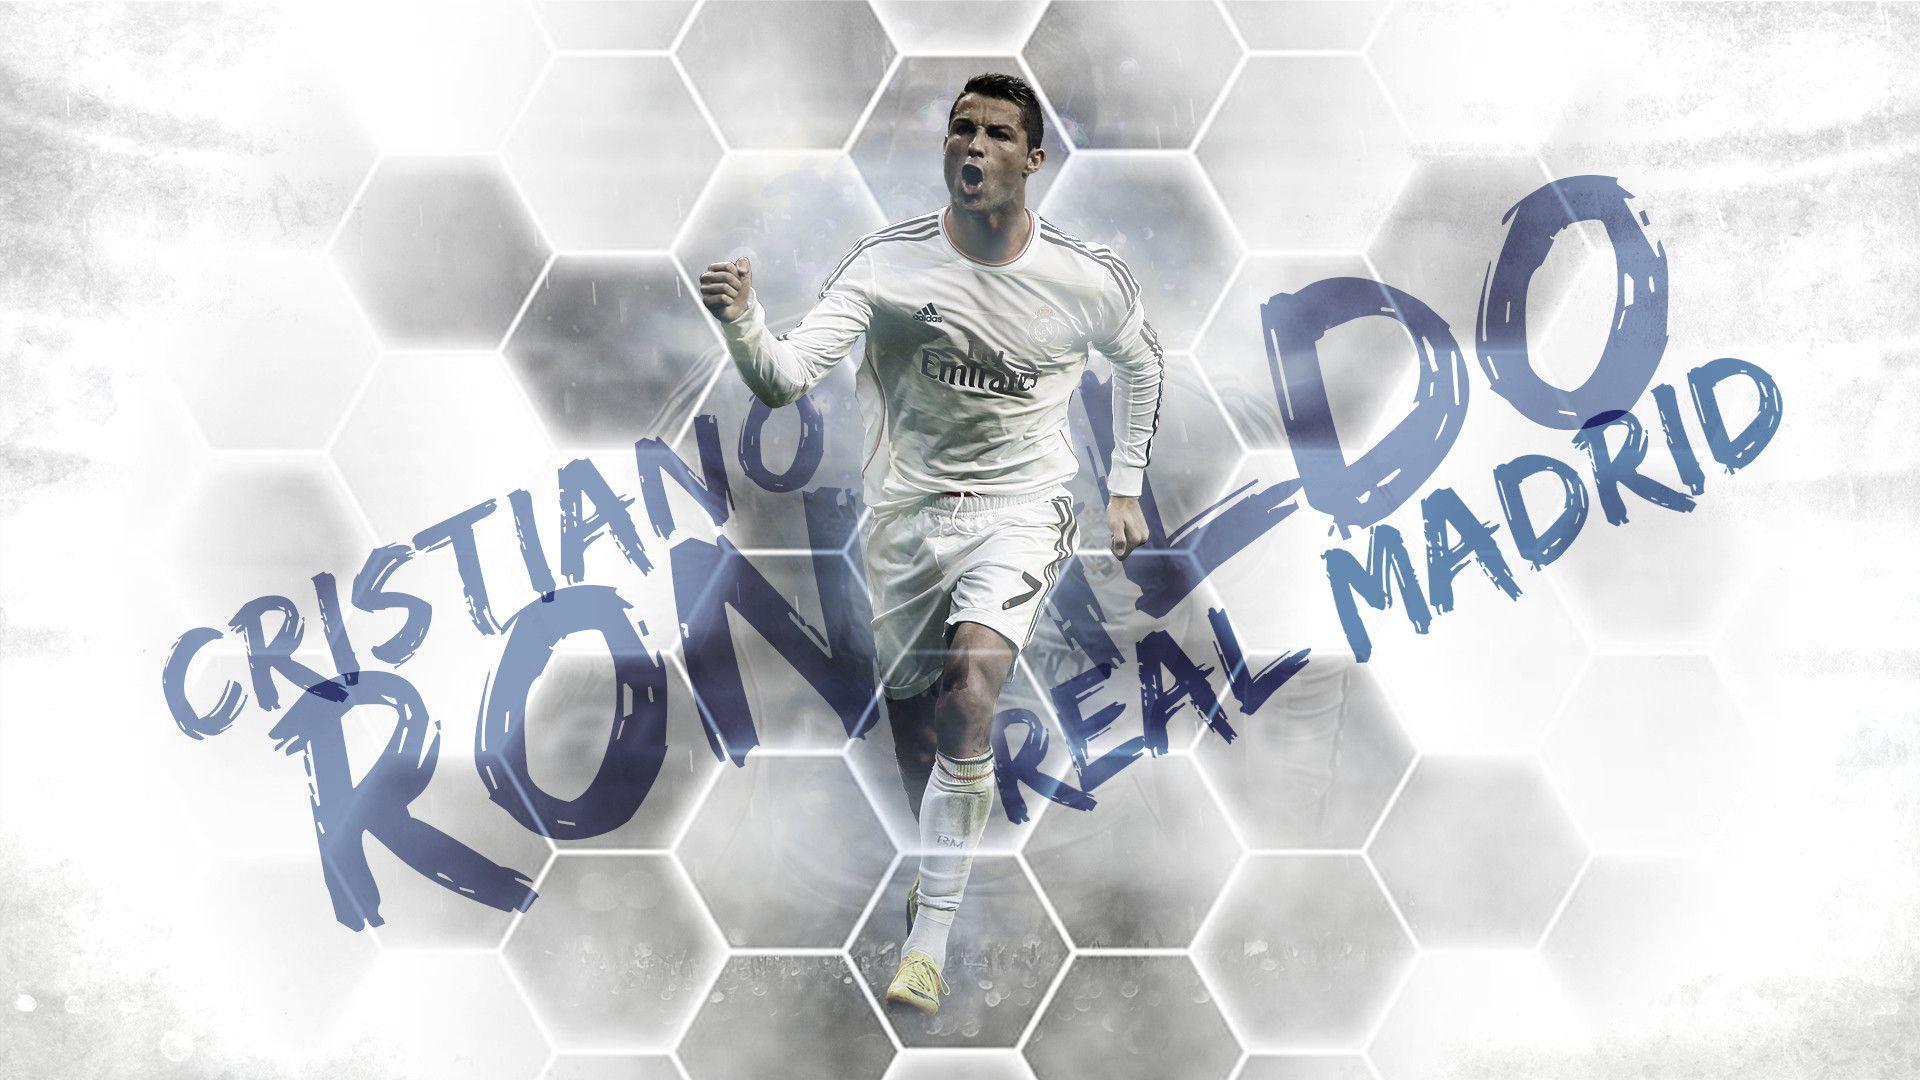 Cristiano Ronaldo Real Madrid 2014